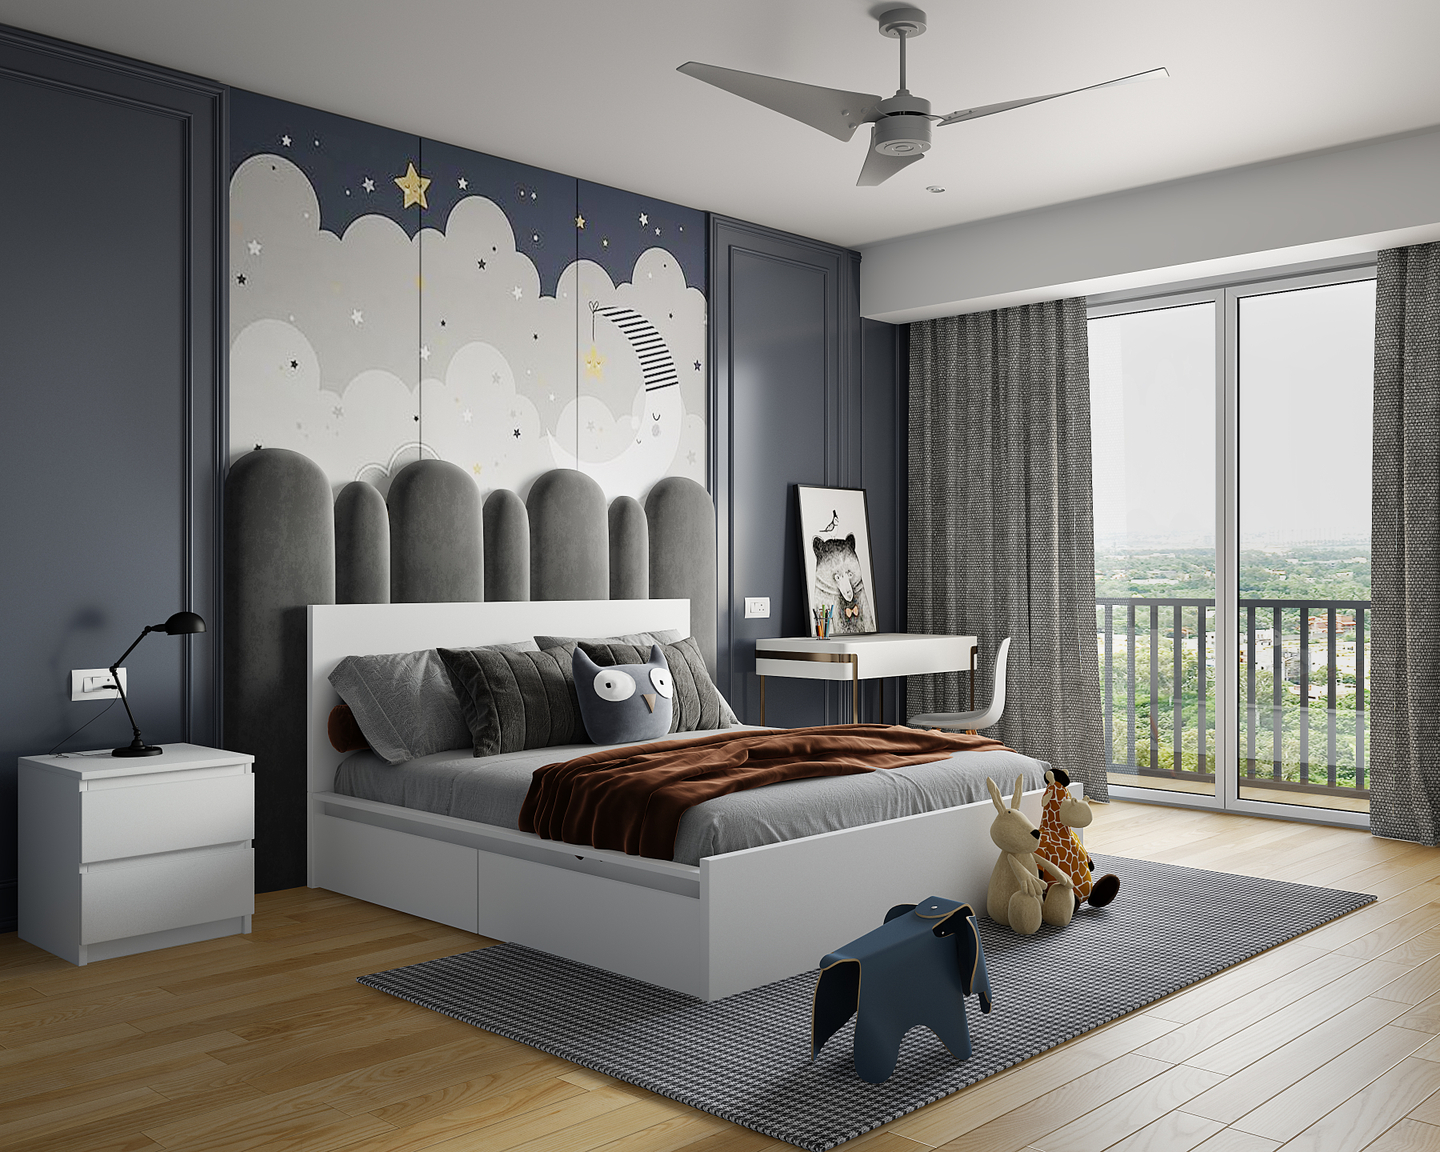 Dreamy Kids Bedroom Design - Livspace